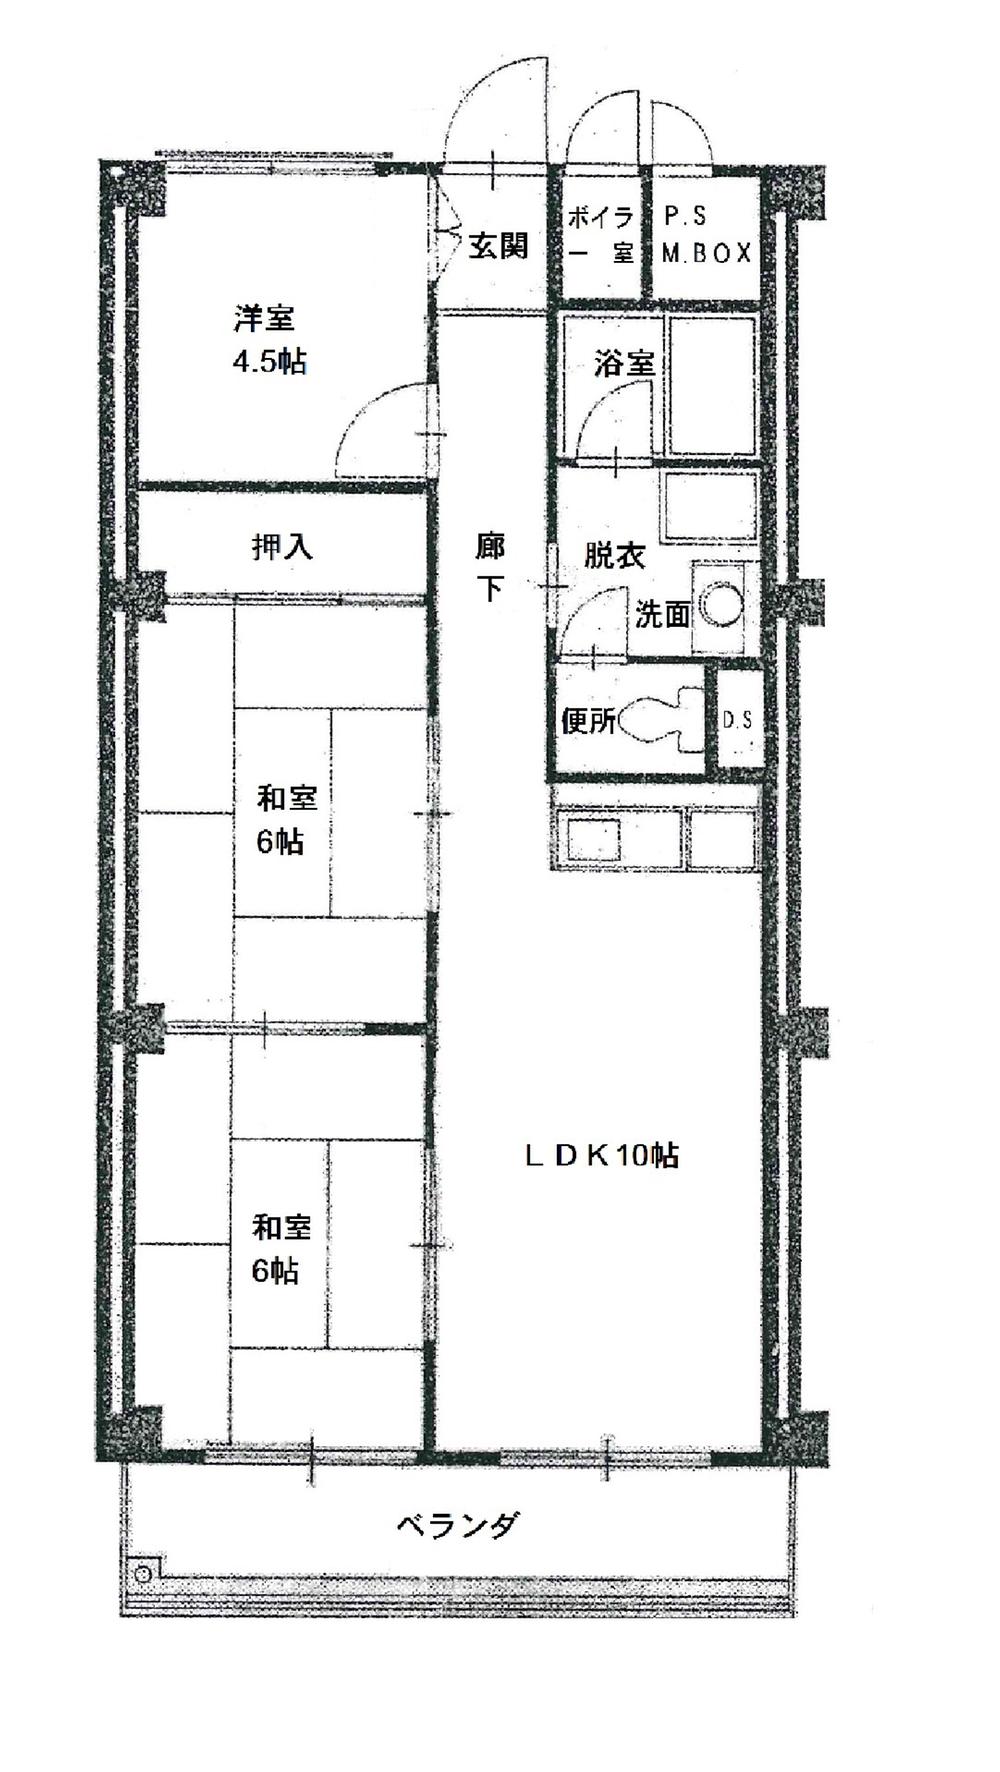 Floor plan. 3LDK, Price 8 million yen, Footprint 56.7 sq m , Balcony area 6.48 sq m Kobori apartment Toyonaka Private garden with 23.26 sq m